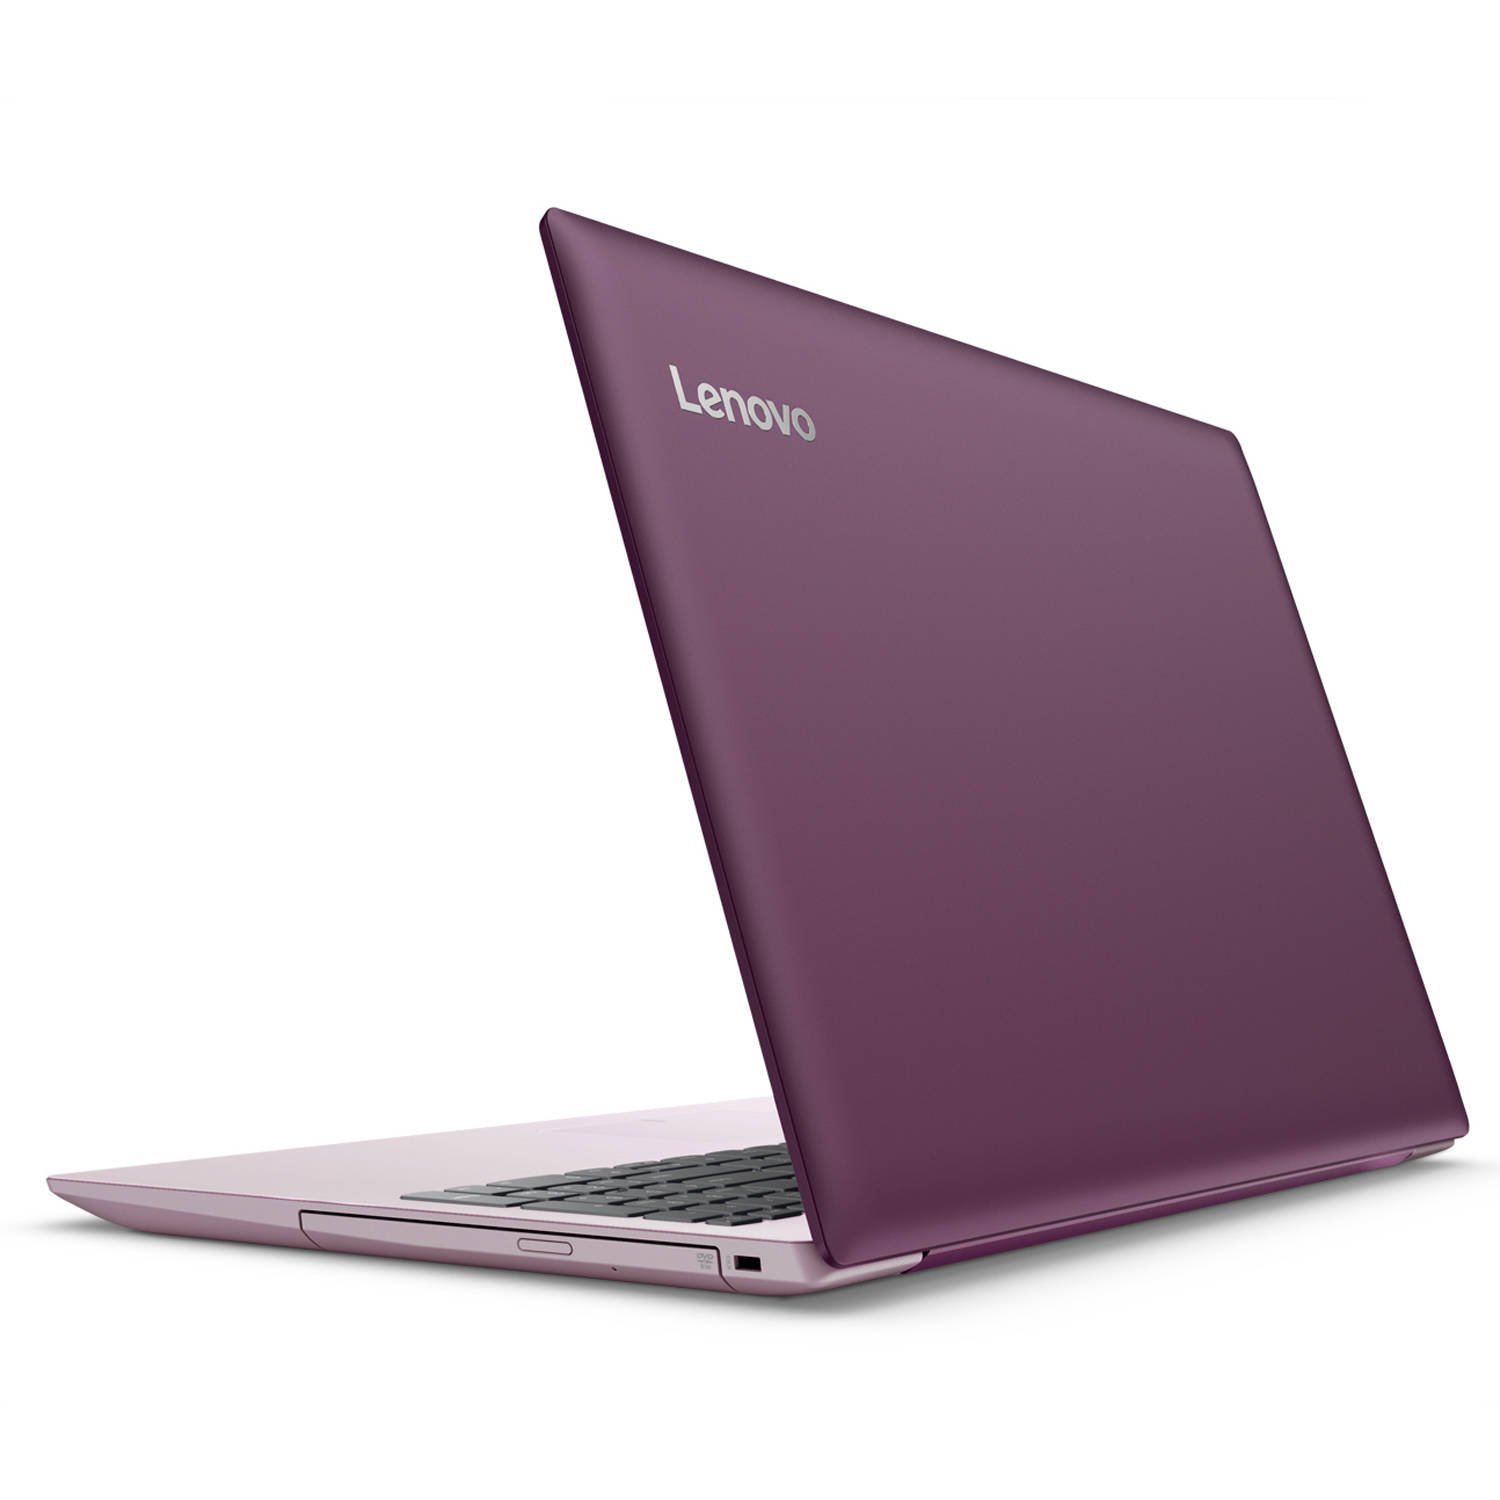 2018 Flagship Lenovo ideapad 320 15.6" HD LED Backlight Laptop- Intel Celeron N3350